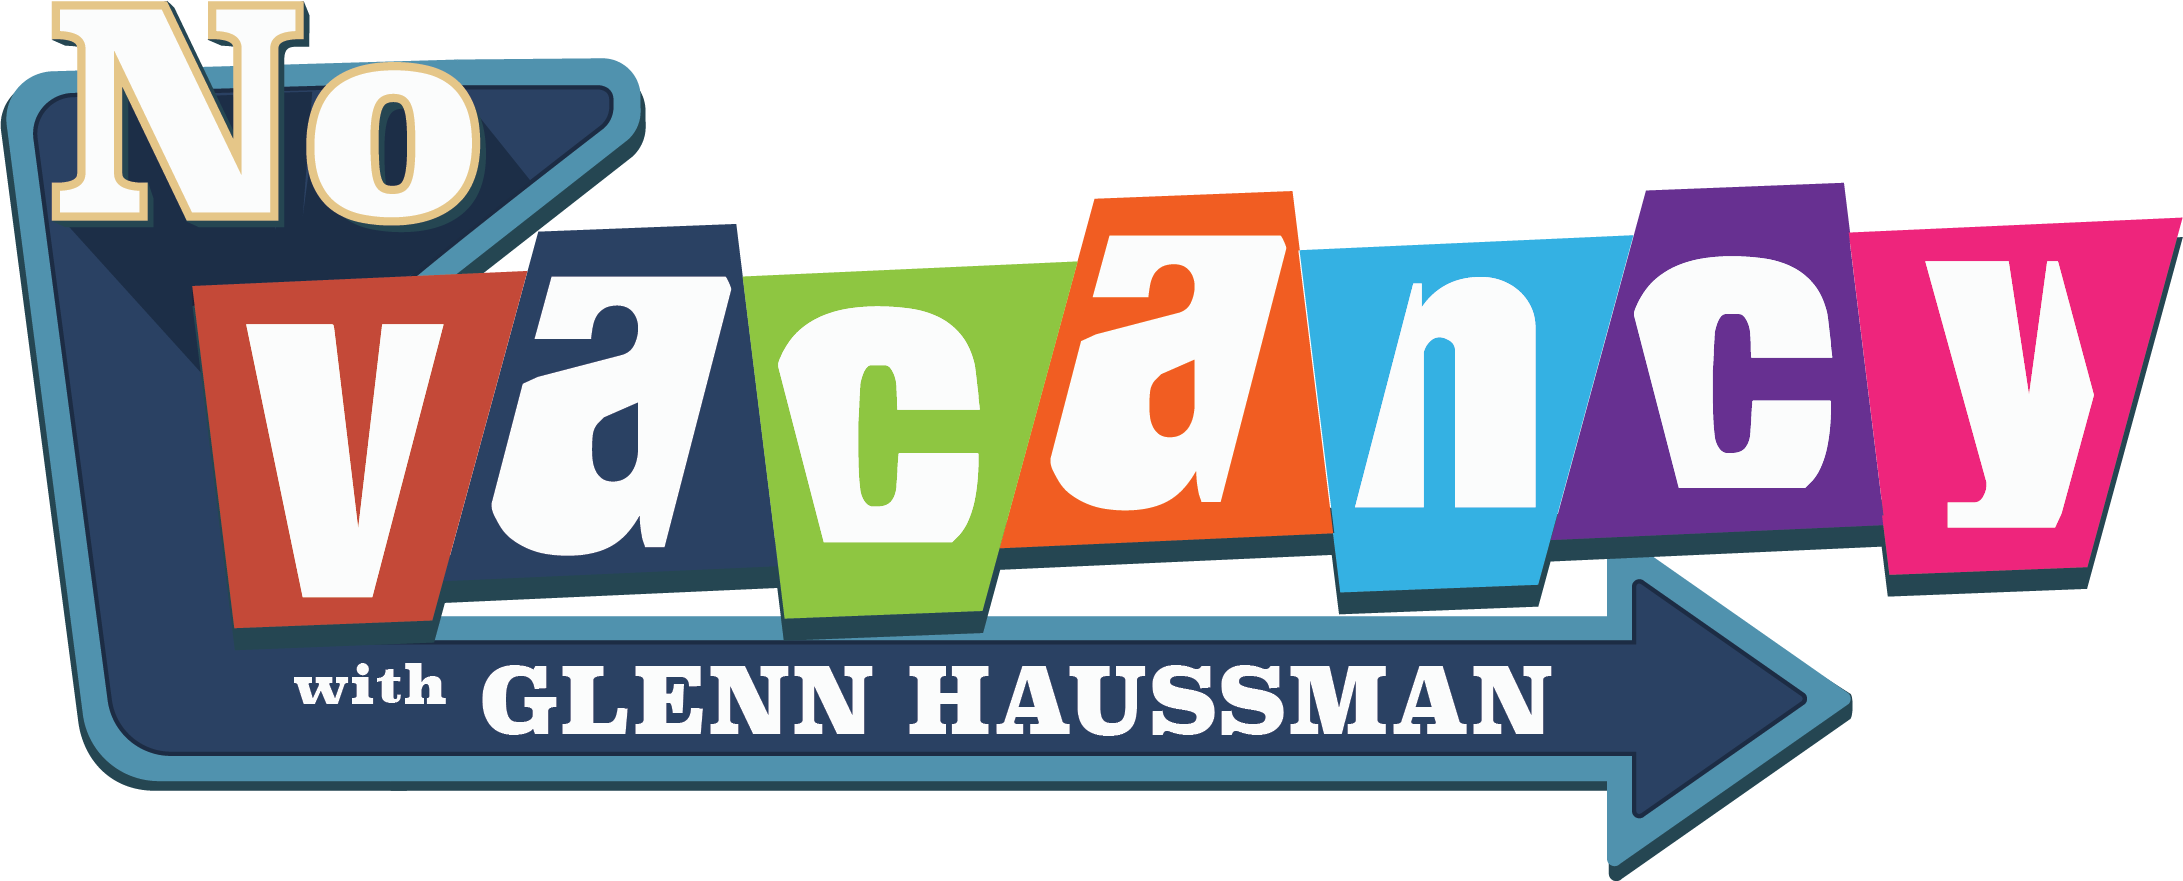 Very Large "No Vacancy with Glenn Haussman" Logo